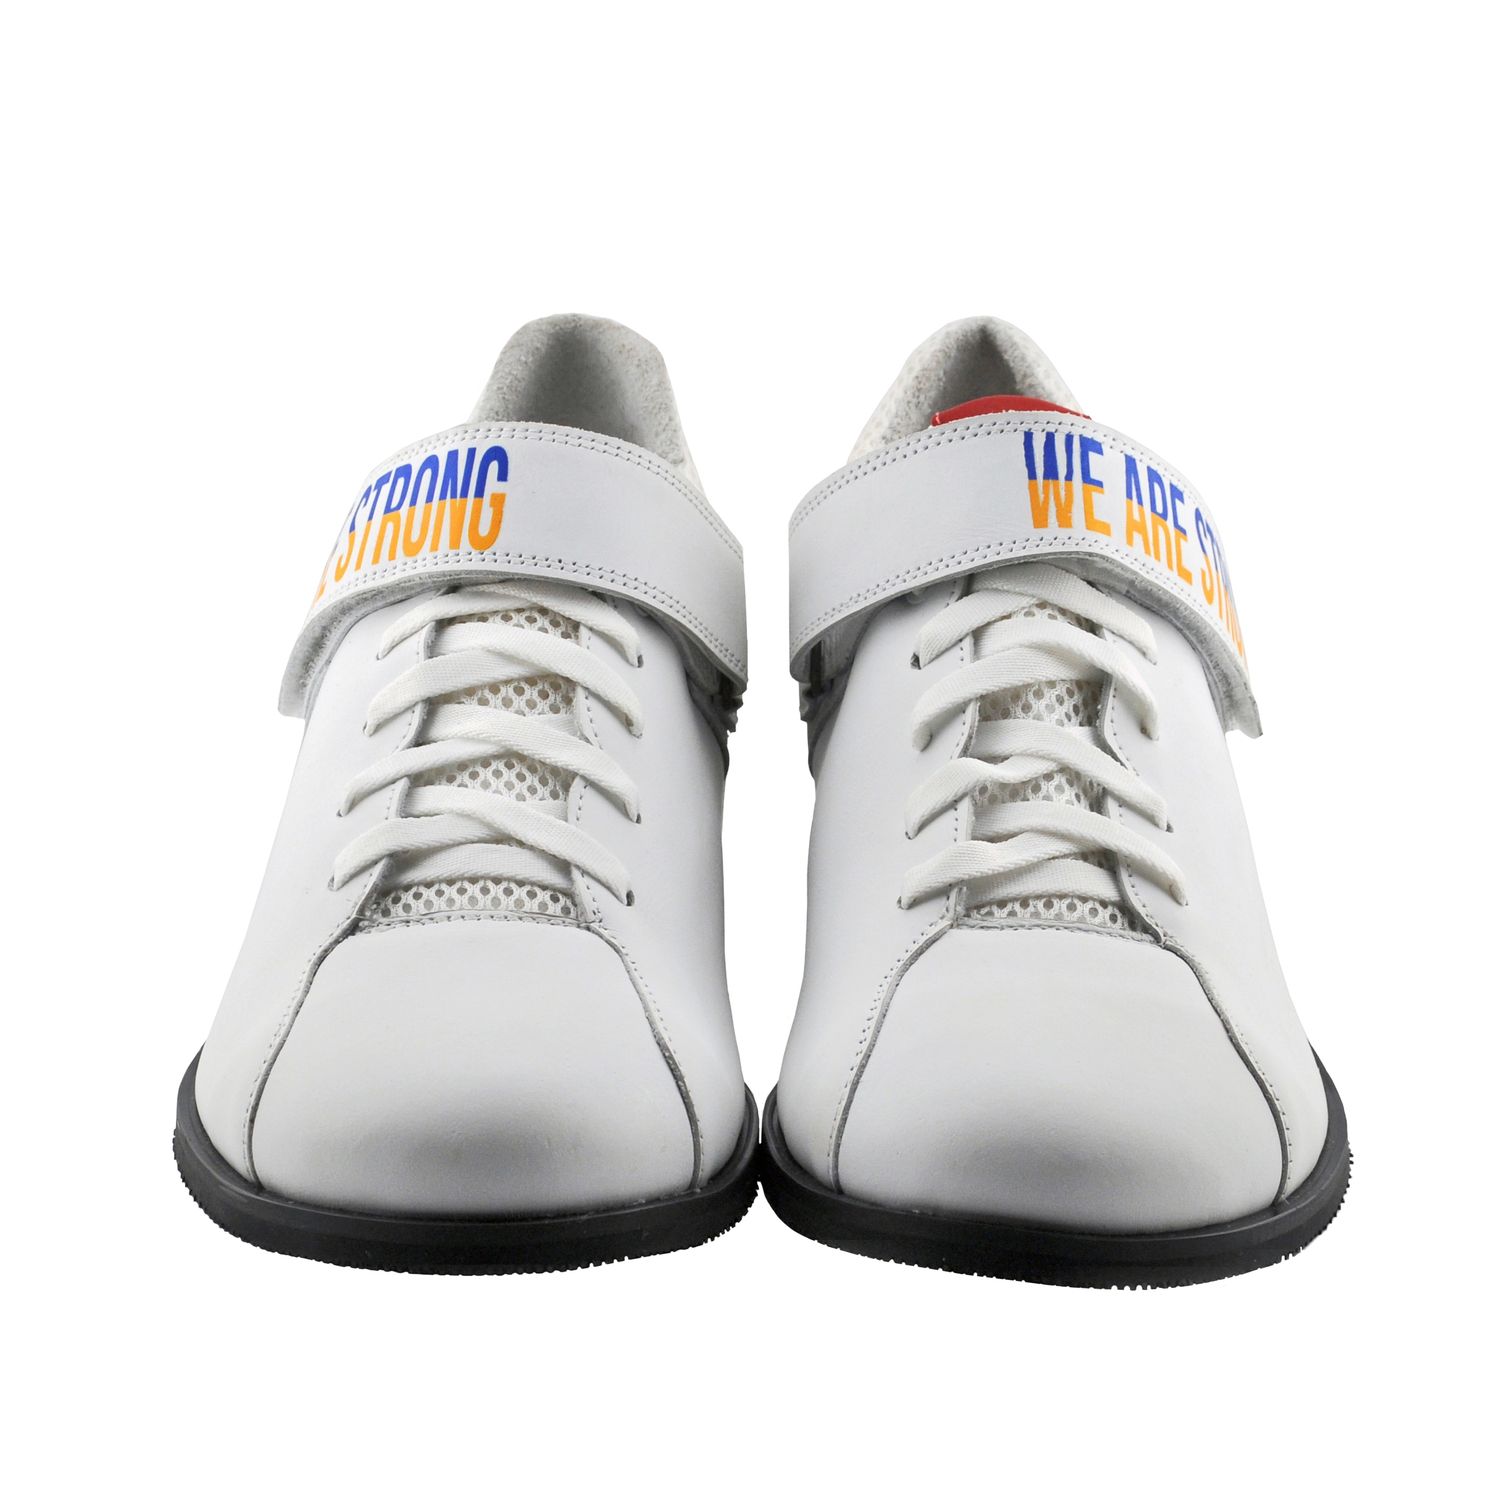 Anatomic Sneakers Zhabotinsky, white, size 40 (UKR)